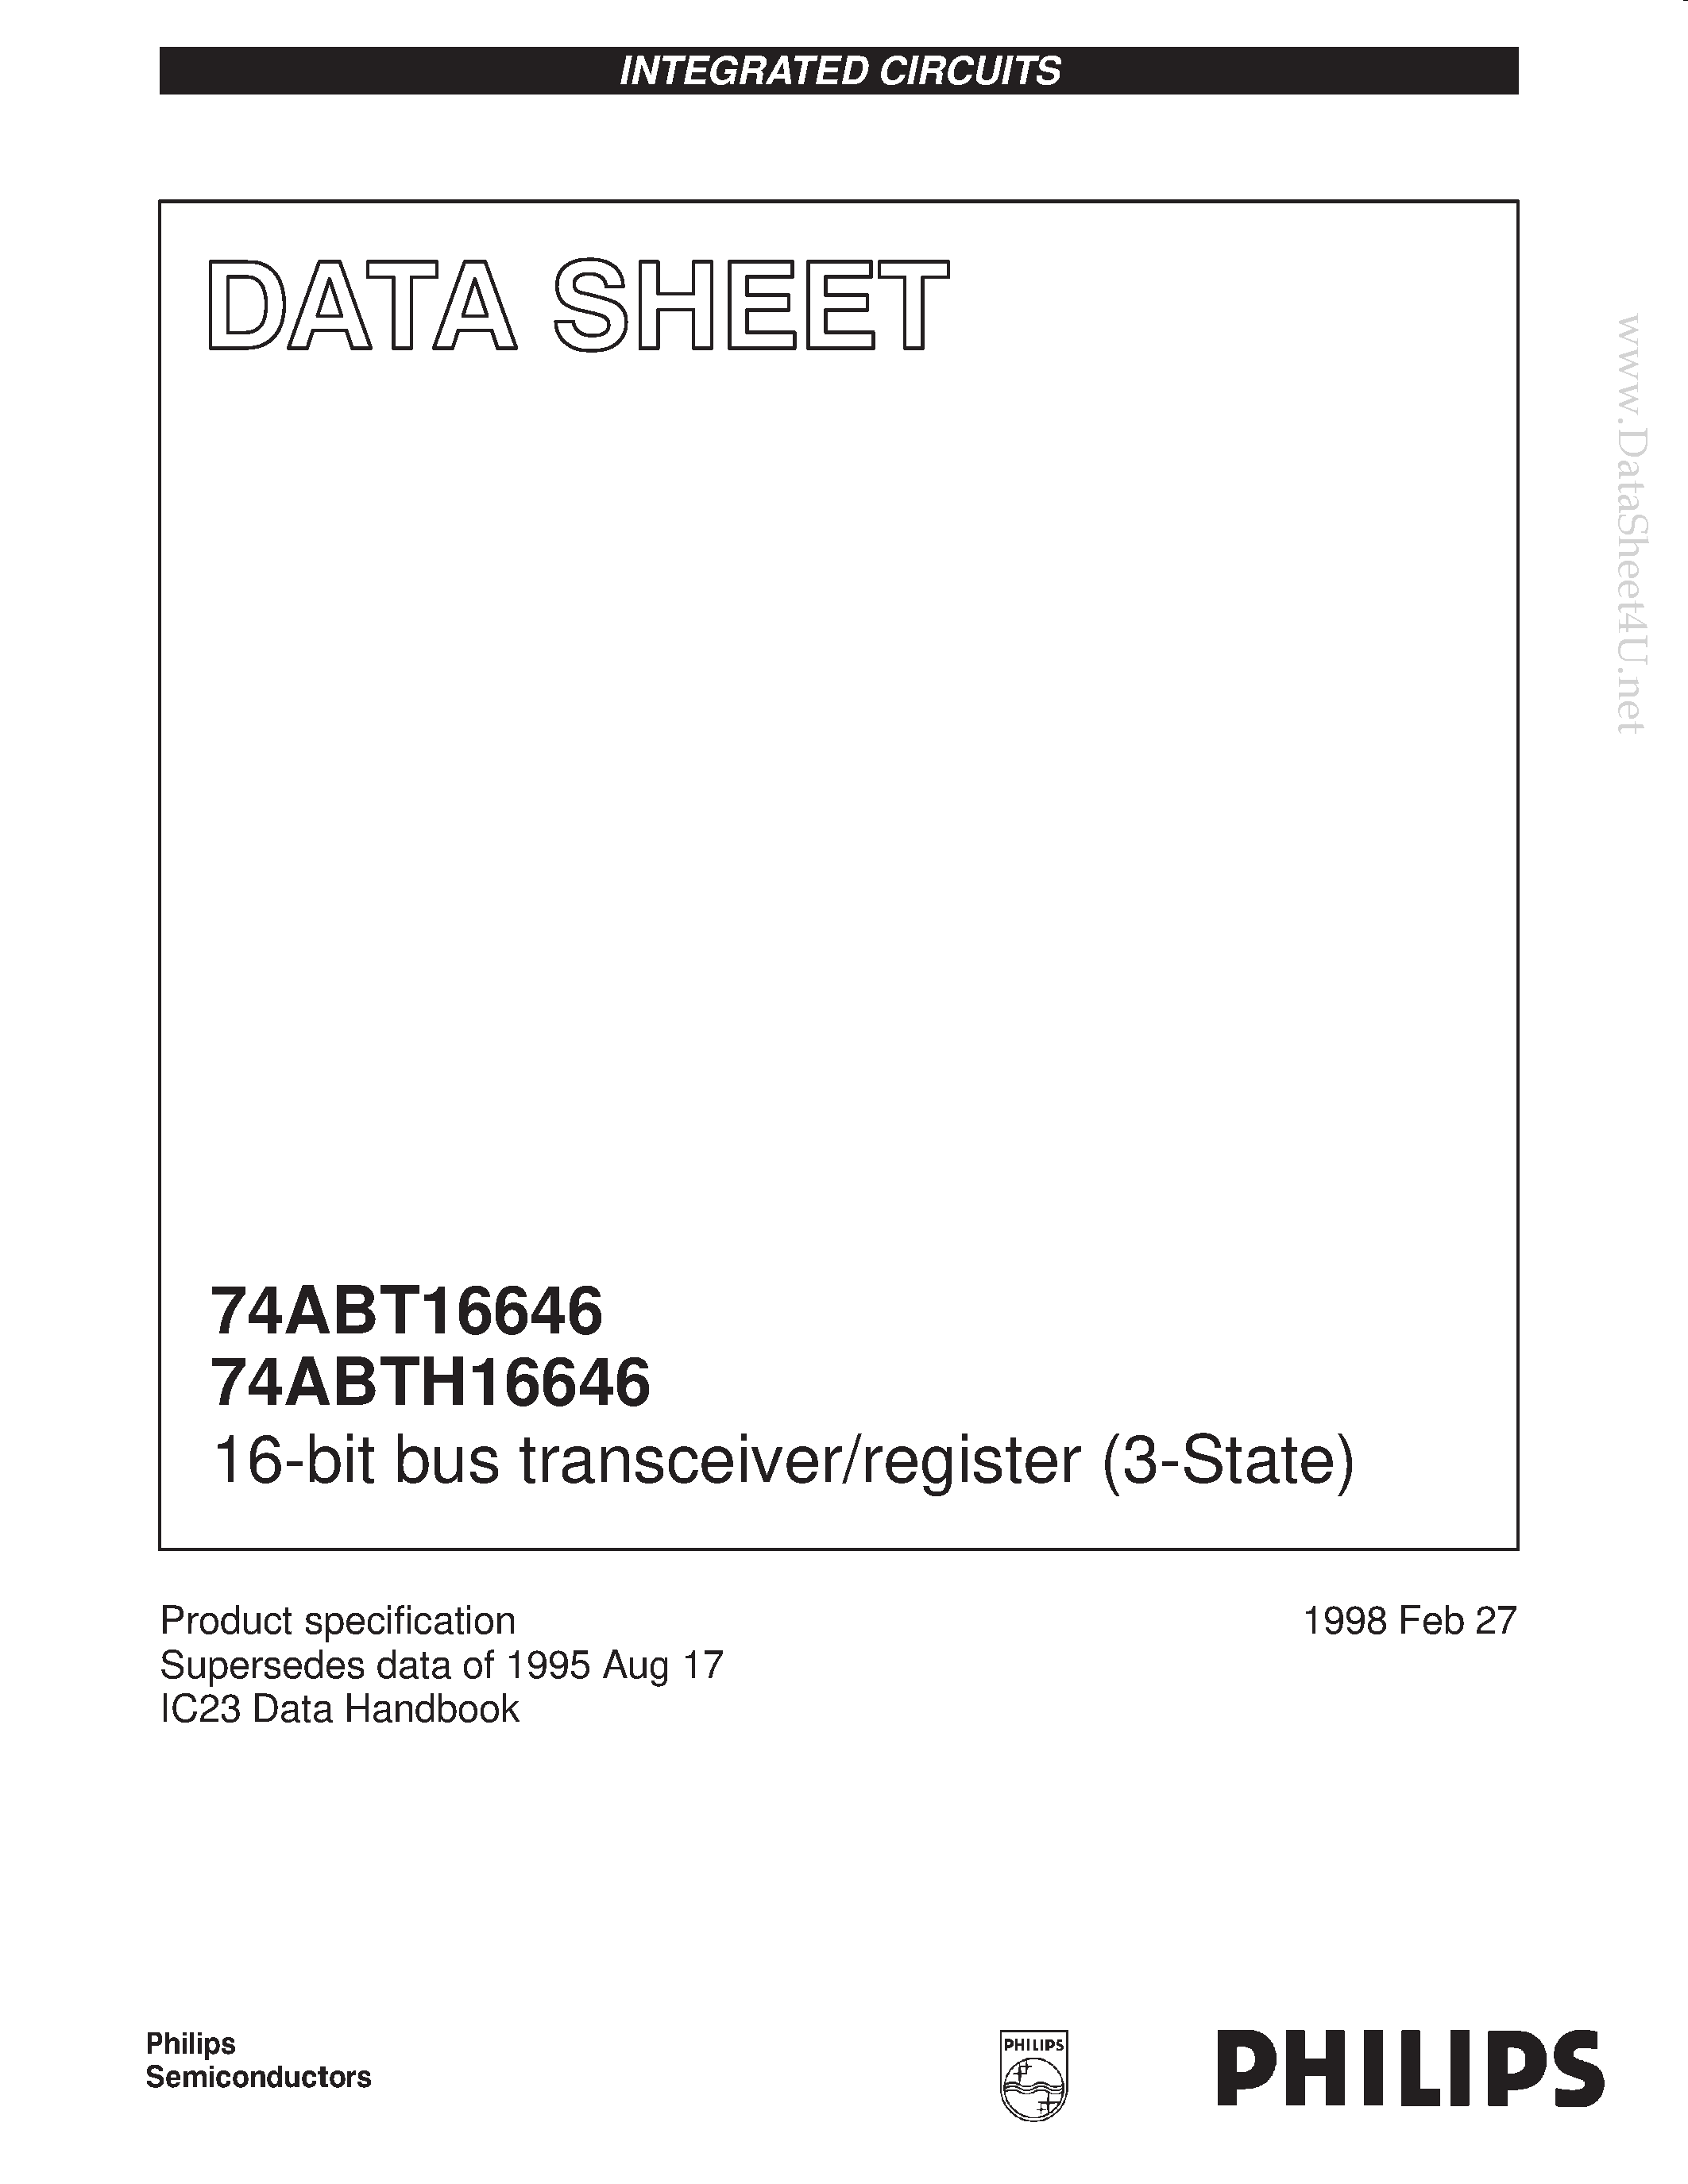 Даташит 74ABTH16646DL - 16-bit bus transceiver/register 3-State страница 1